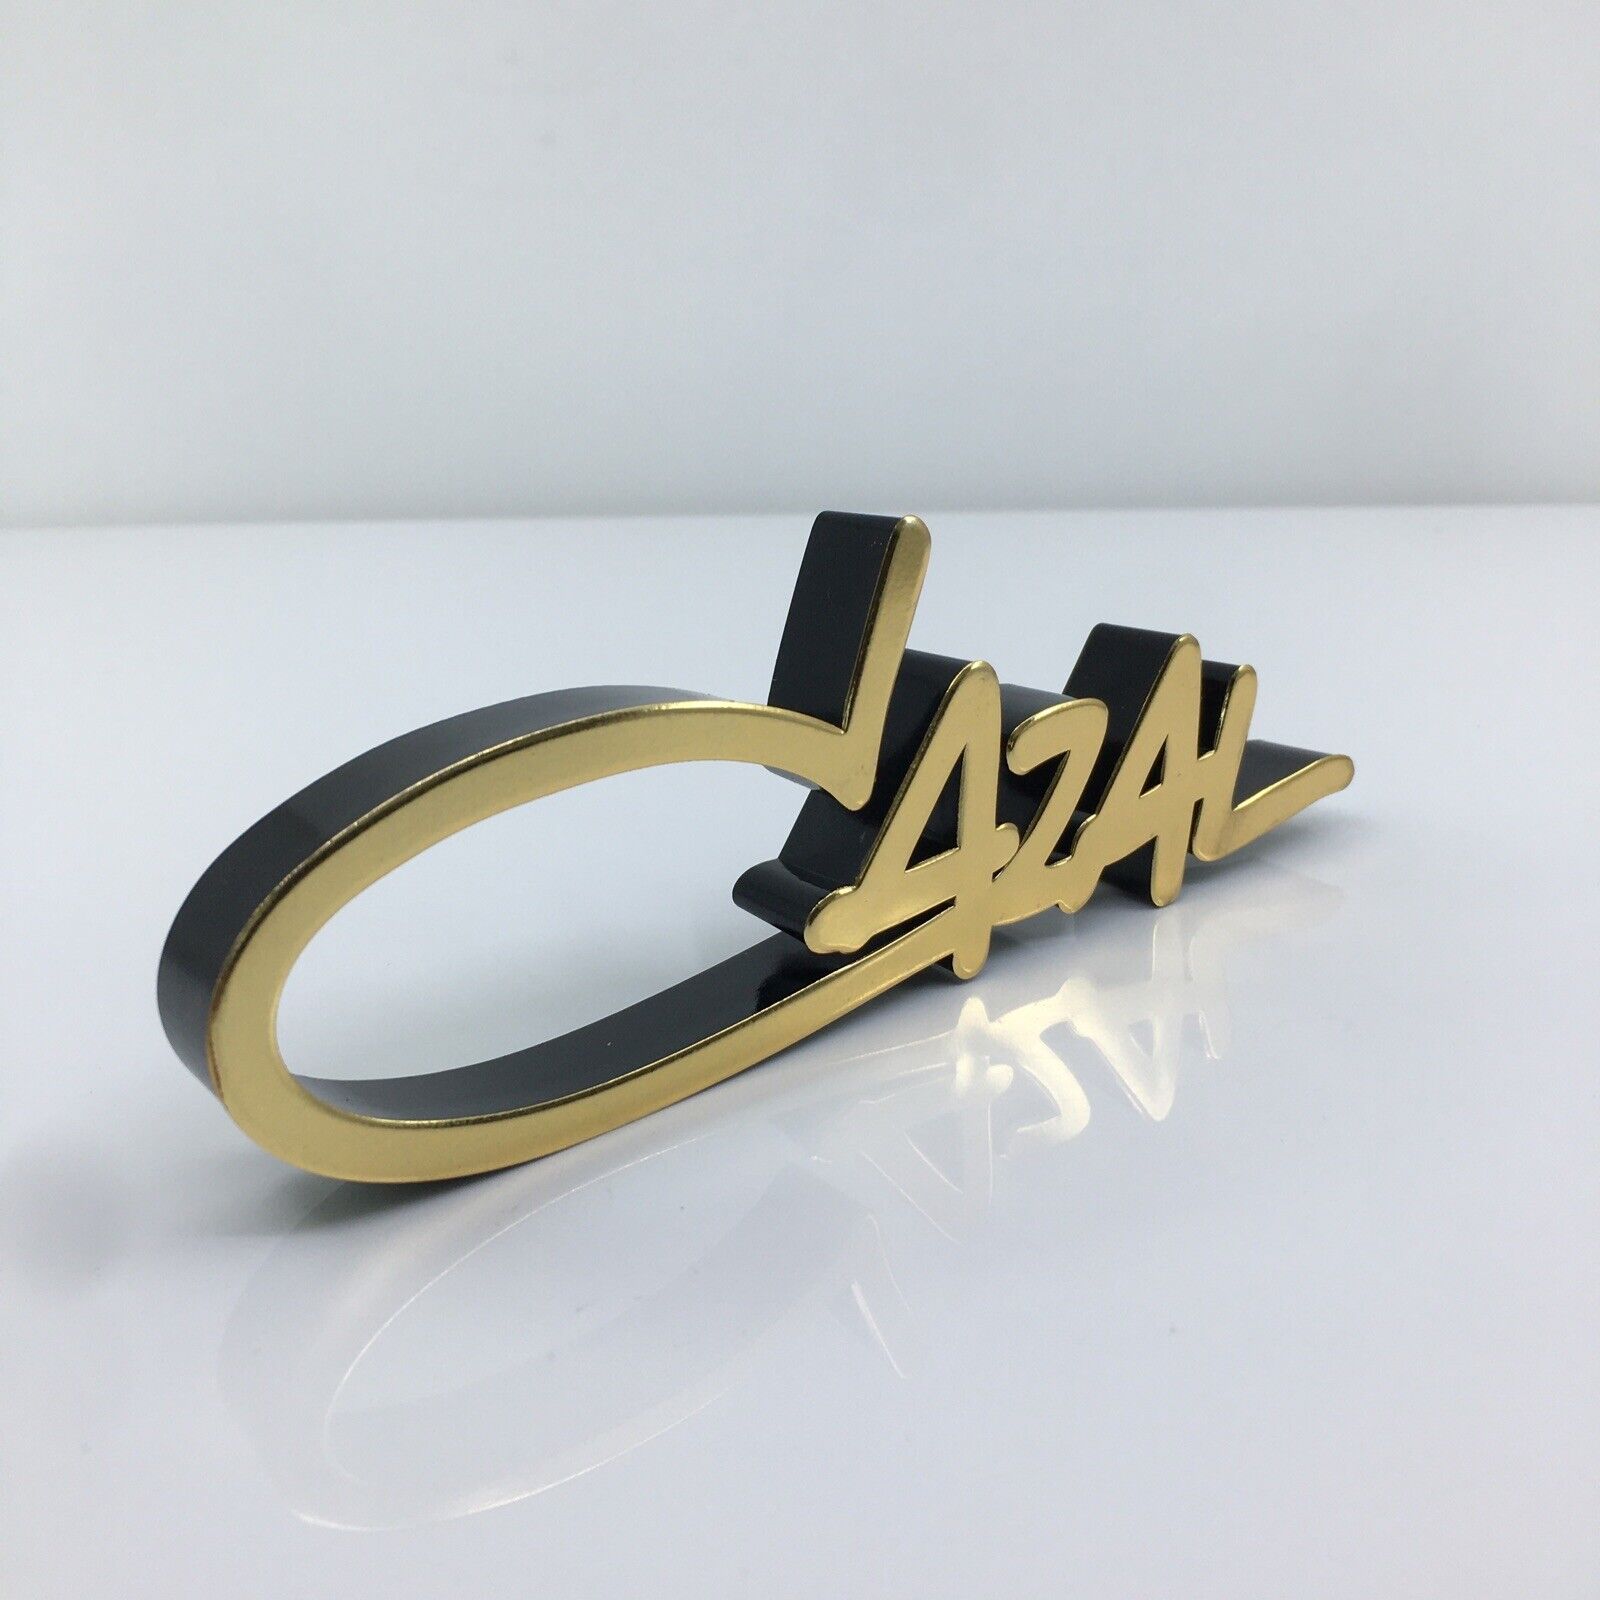 New CAZAL LOGO DISPLAY MODEL Gold & Black 3D MINI LOGO SIGN EYEWEAR Dealer Logo